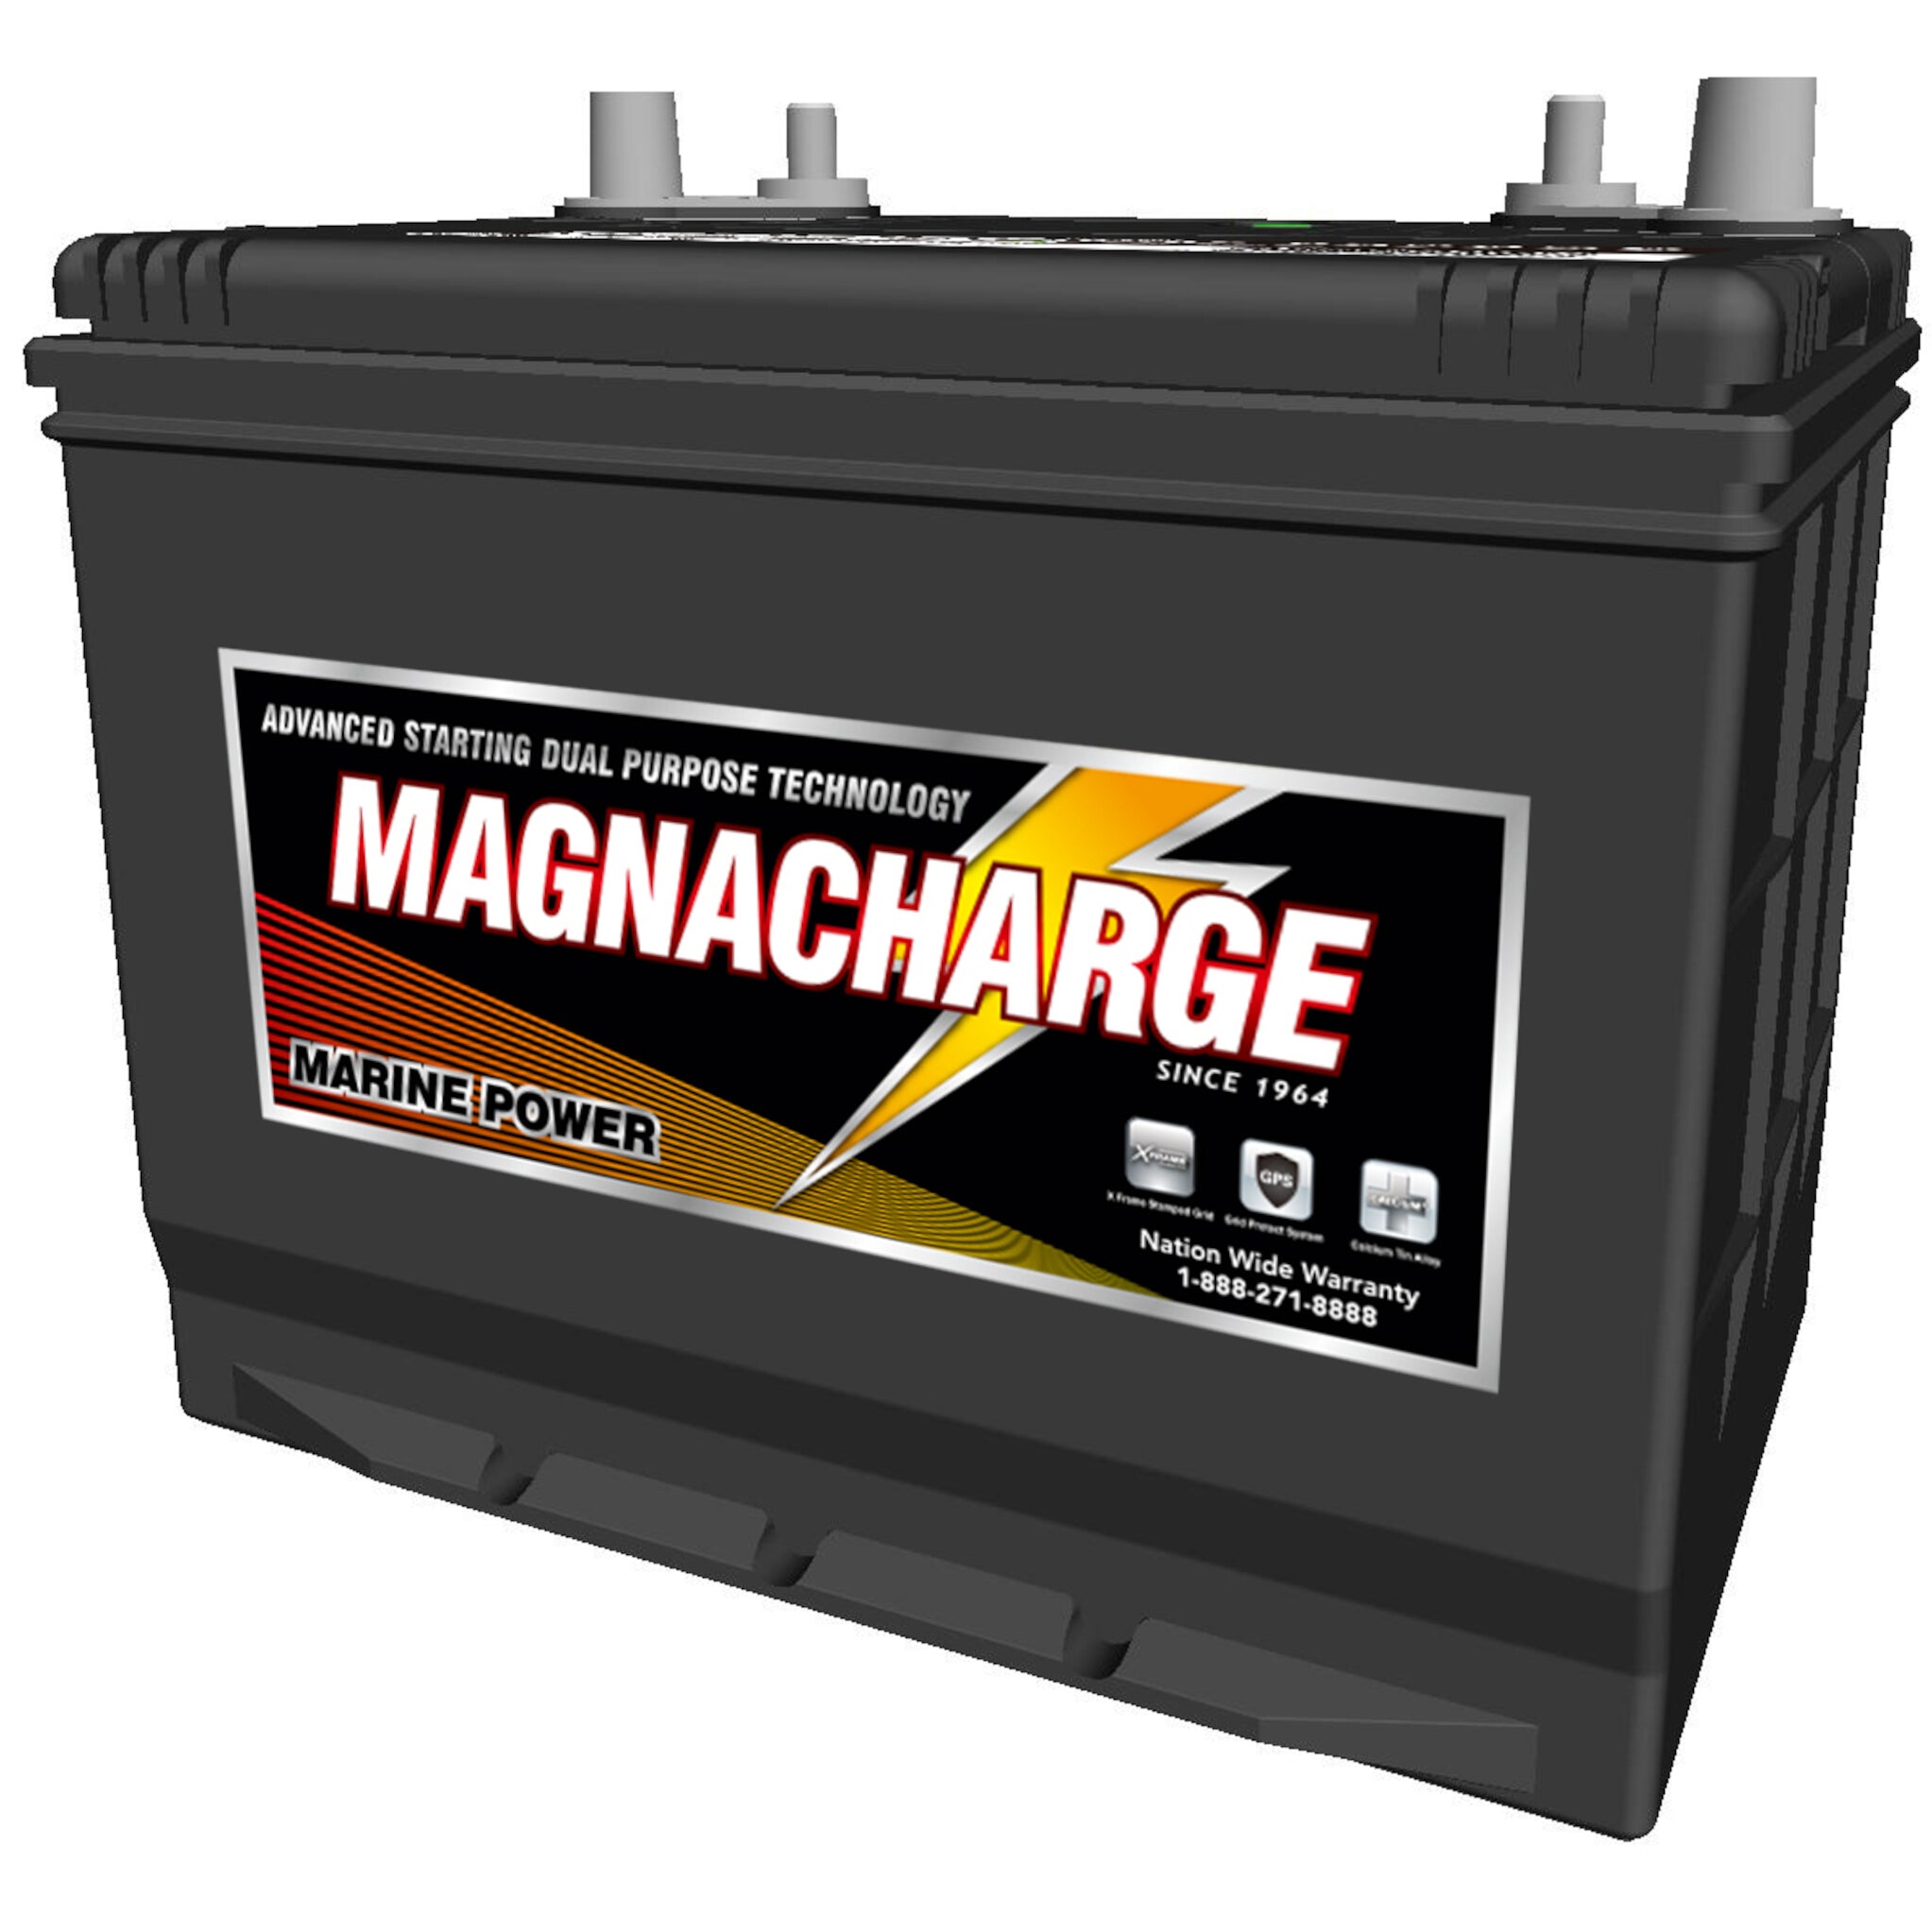 Magnacharge 24M-650 Dual Purpose Marine Group 24 Battery